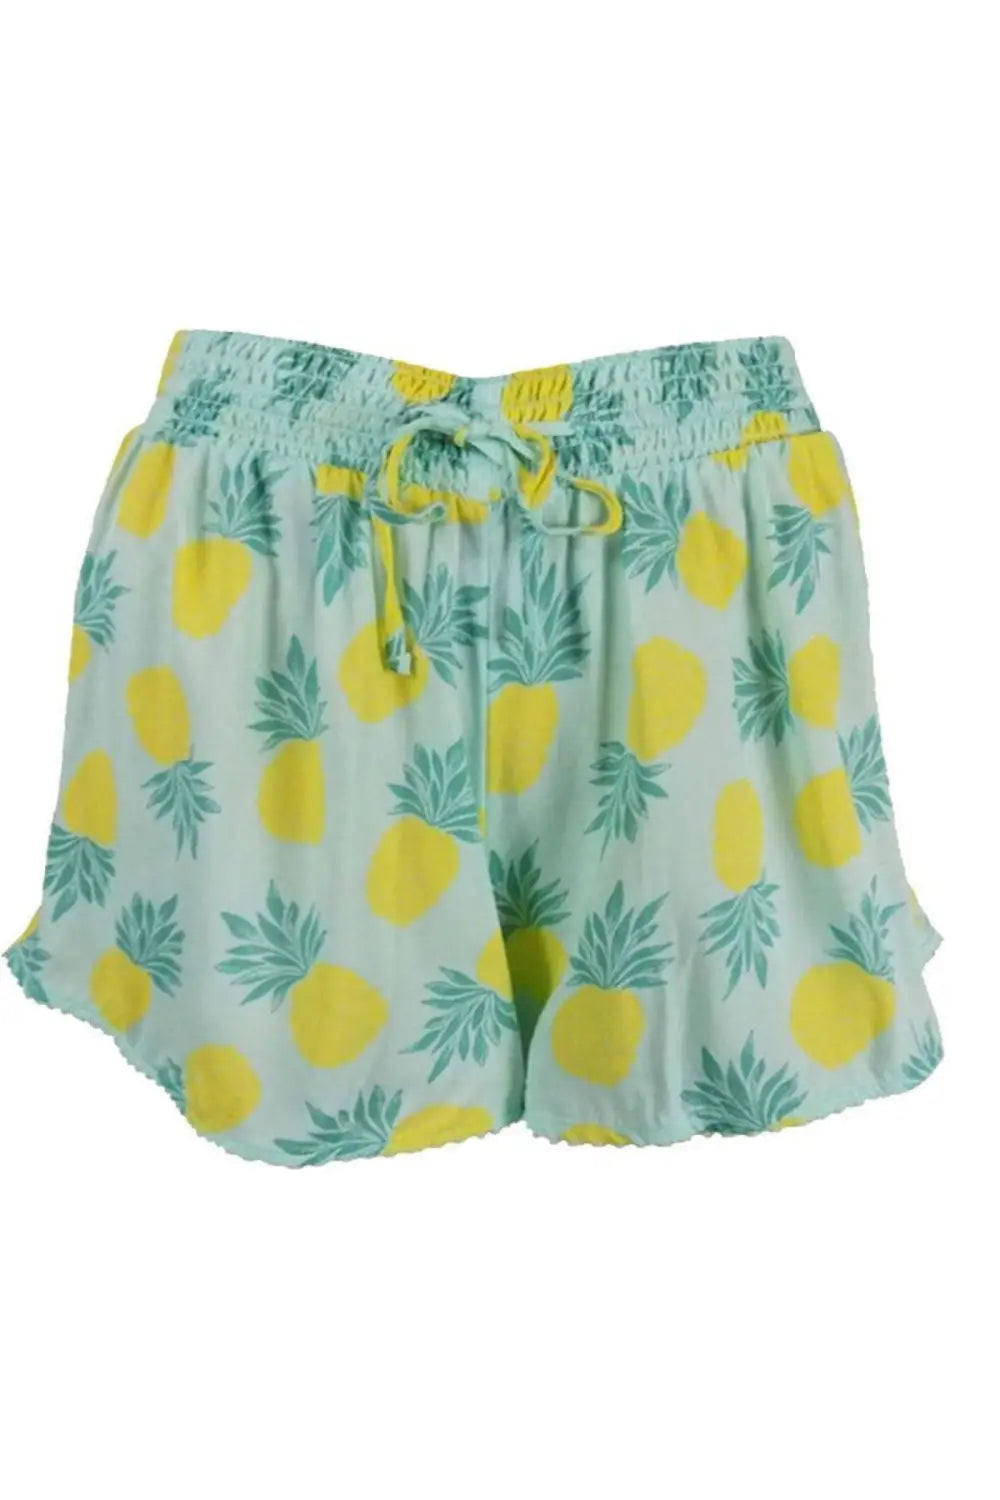 M&S Womens Soft Viscose Beach Shorts